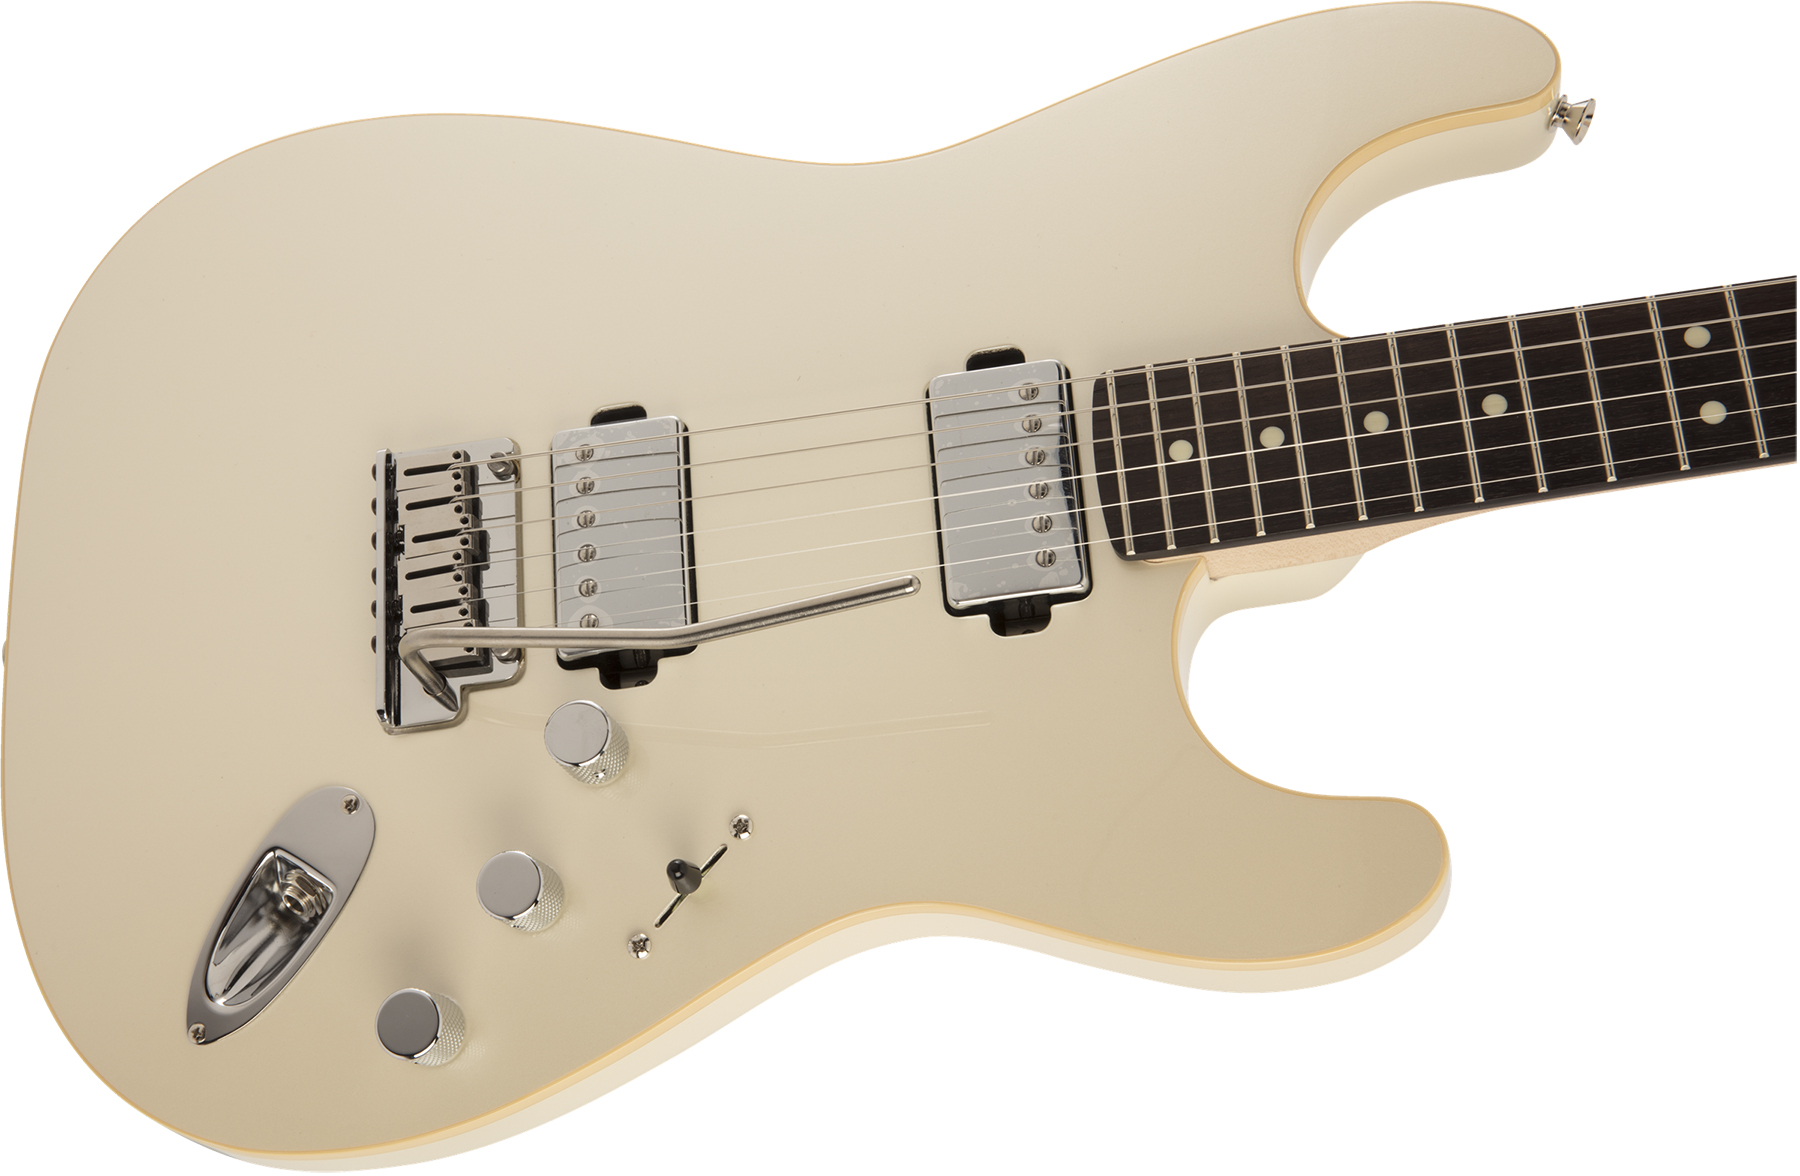 Fender Strat Modern Hh Japon Trem Rw - Olympic Pearl - Guitarra eléctrica con forma de str. - Variation 2